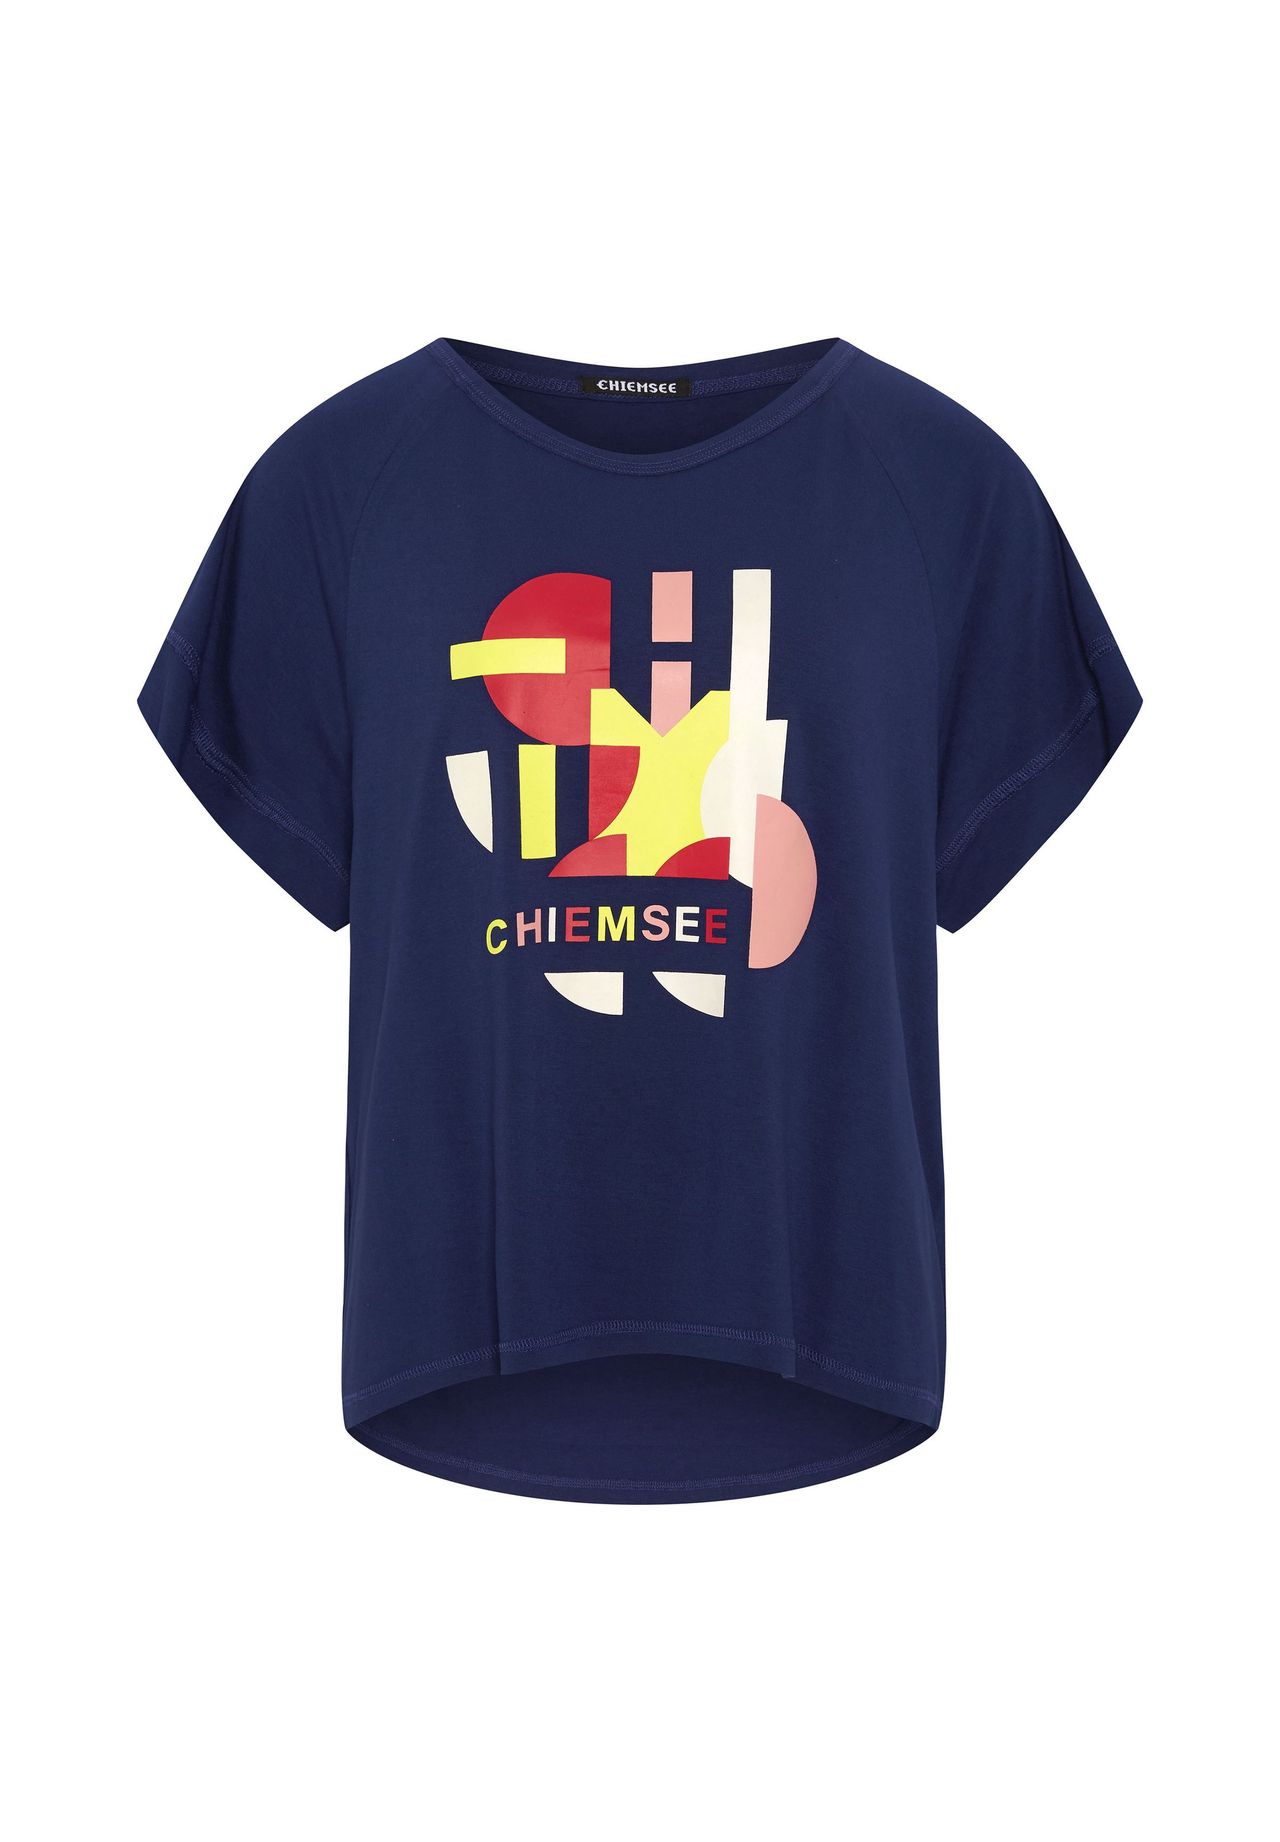 Chiemsee shirt kaufen | GALERIA